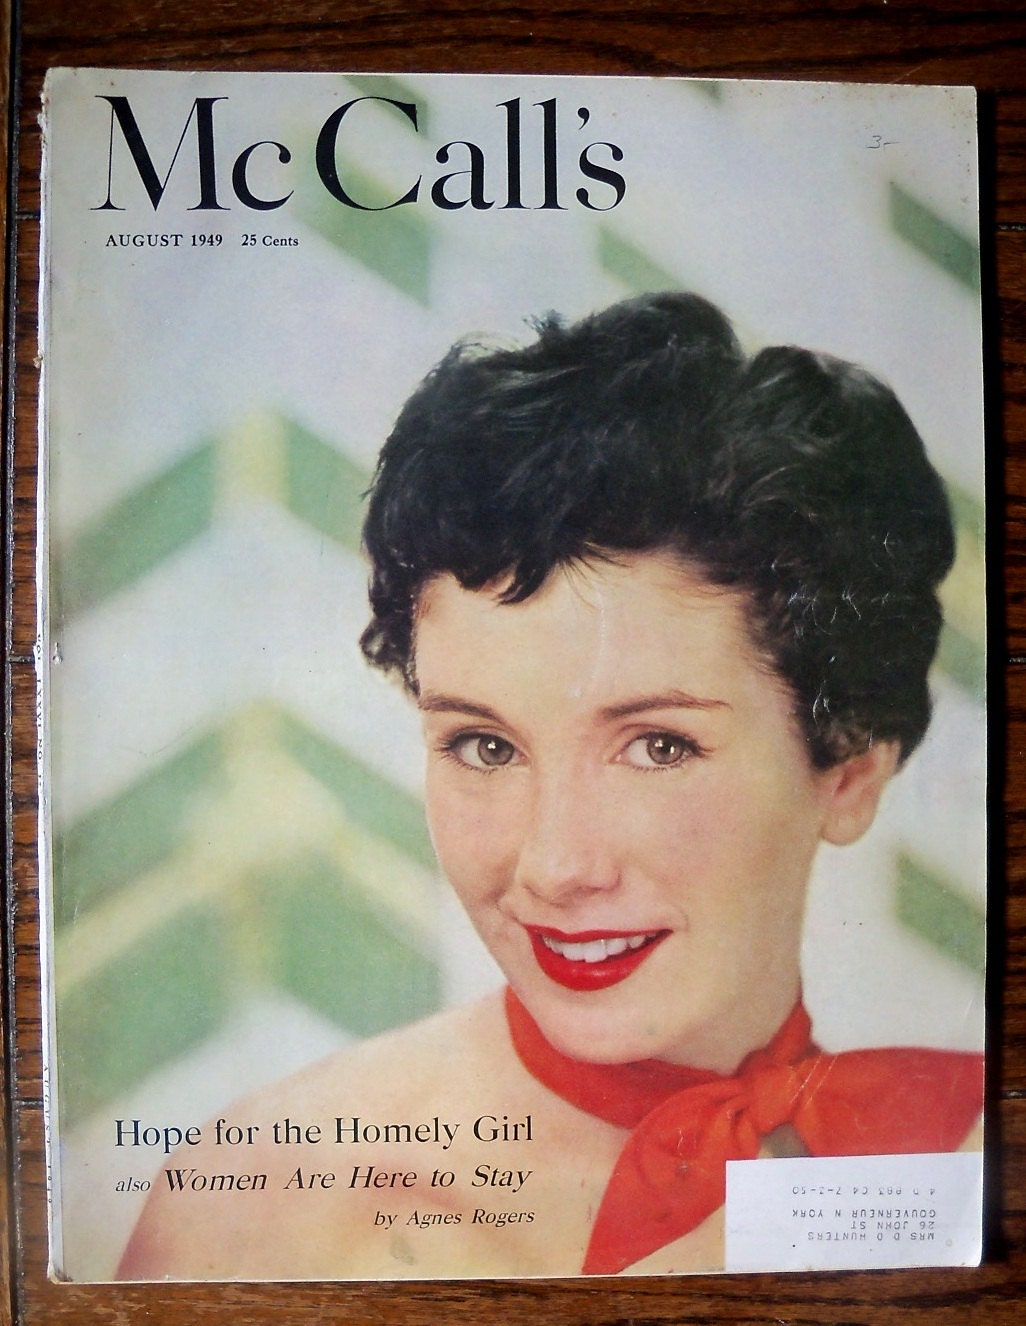 MCCALLS Magazine August 1949 Vintage fashions advertising art